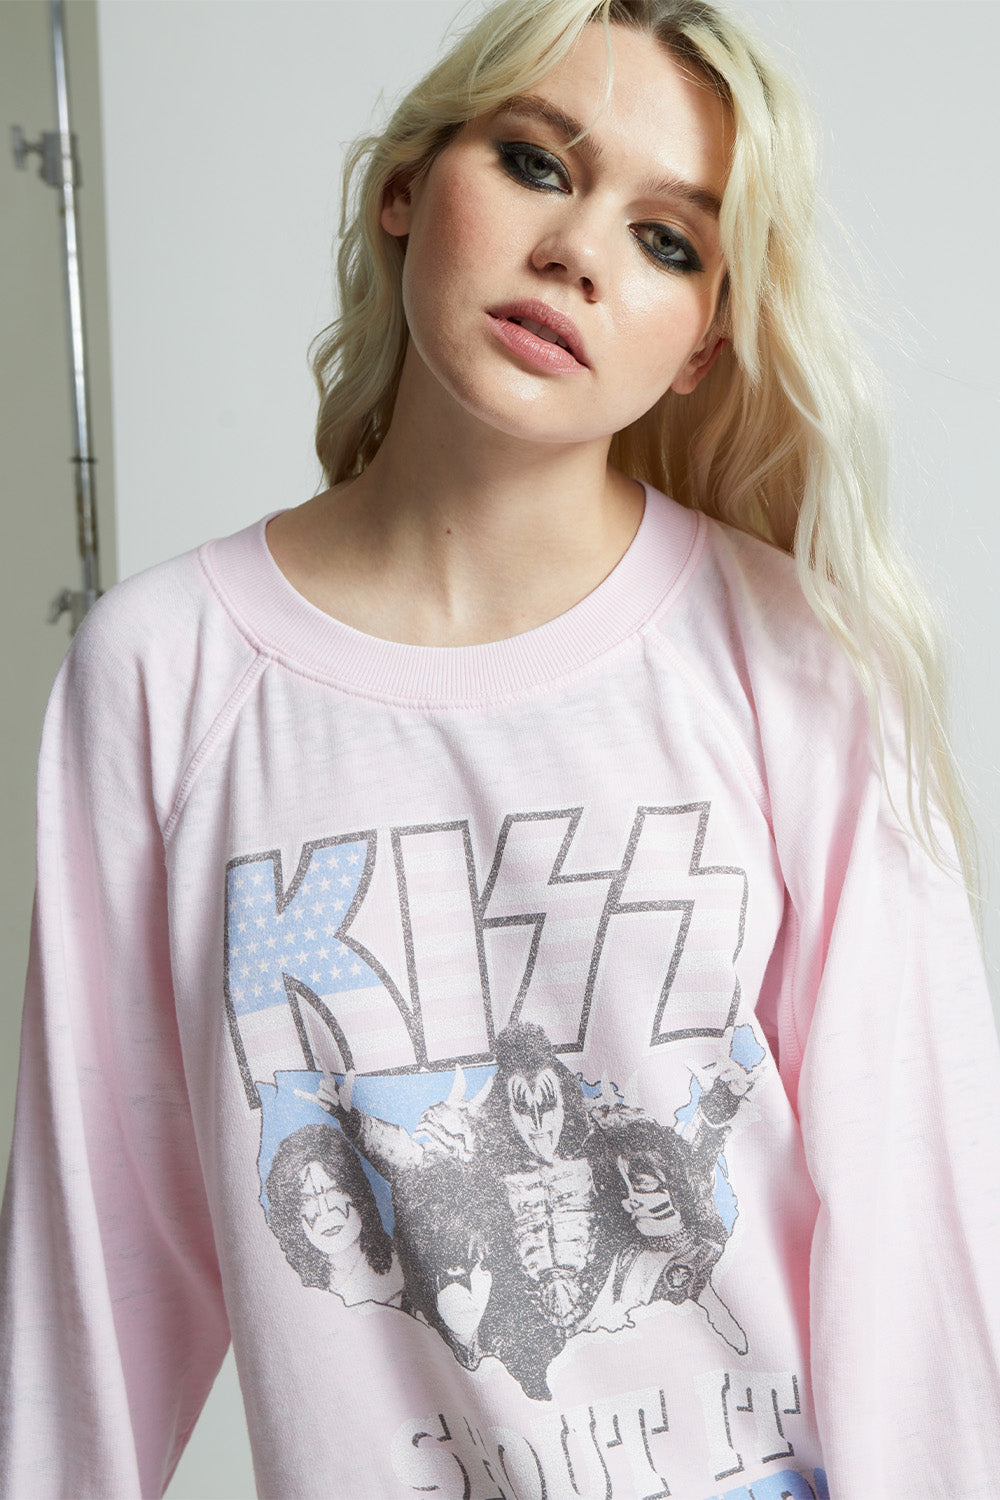 KISS Loud Sweatshirt by Recycled Karma Brands